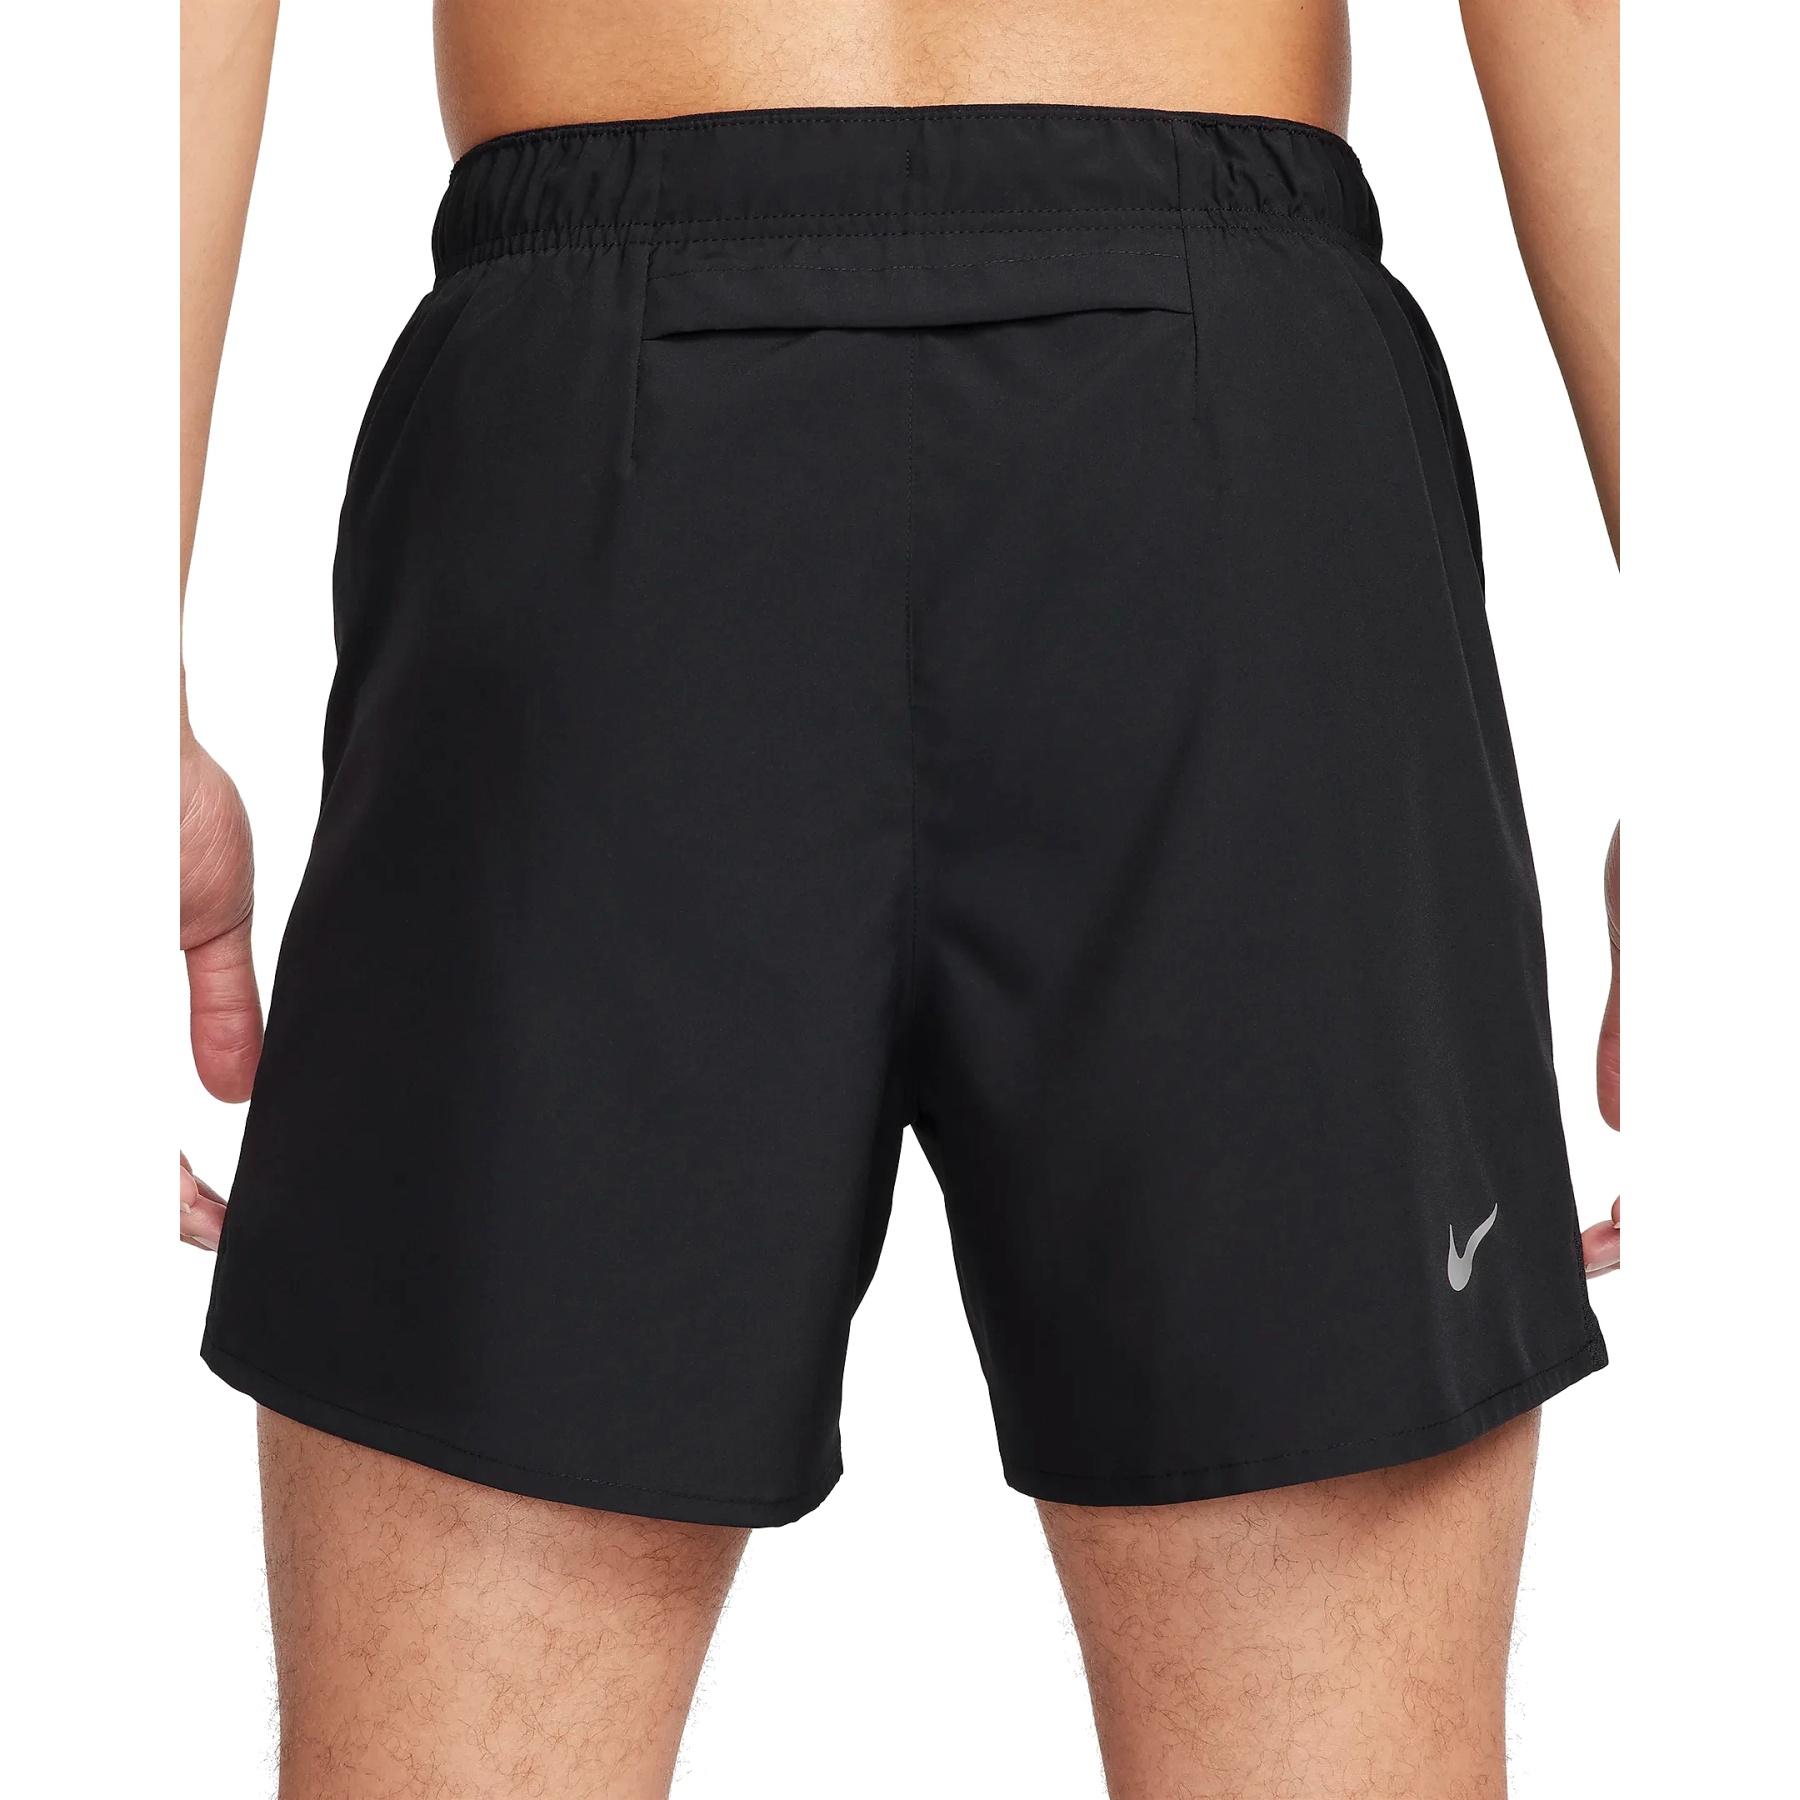 Nike Dri-FIT Stride 5 Brief-Lined Running Shorts Men - black